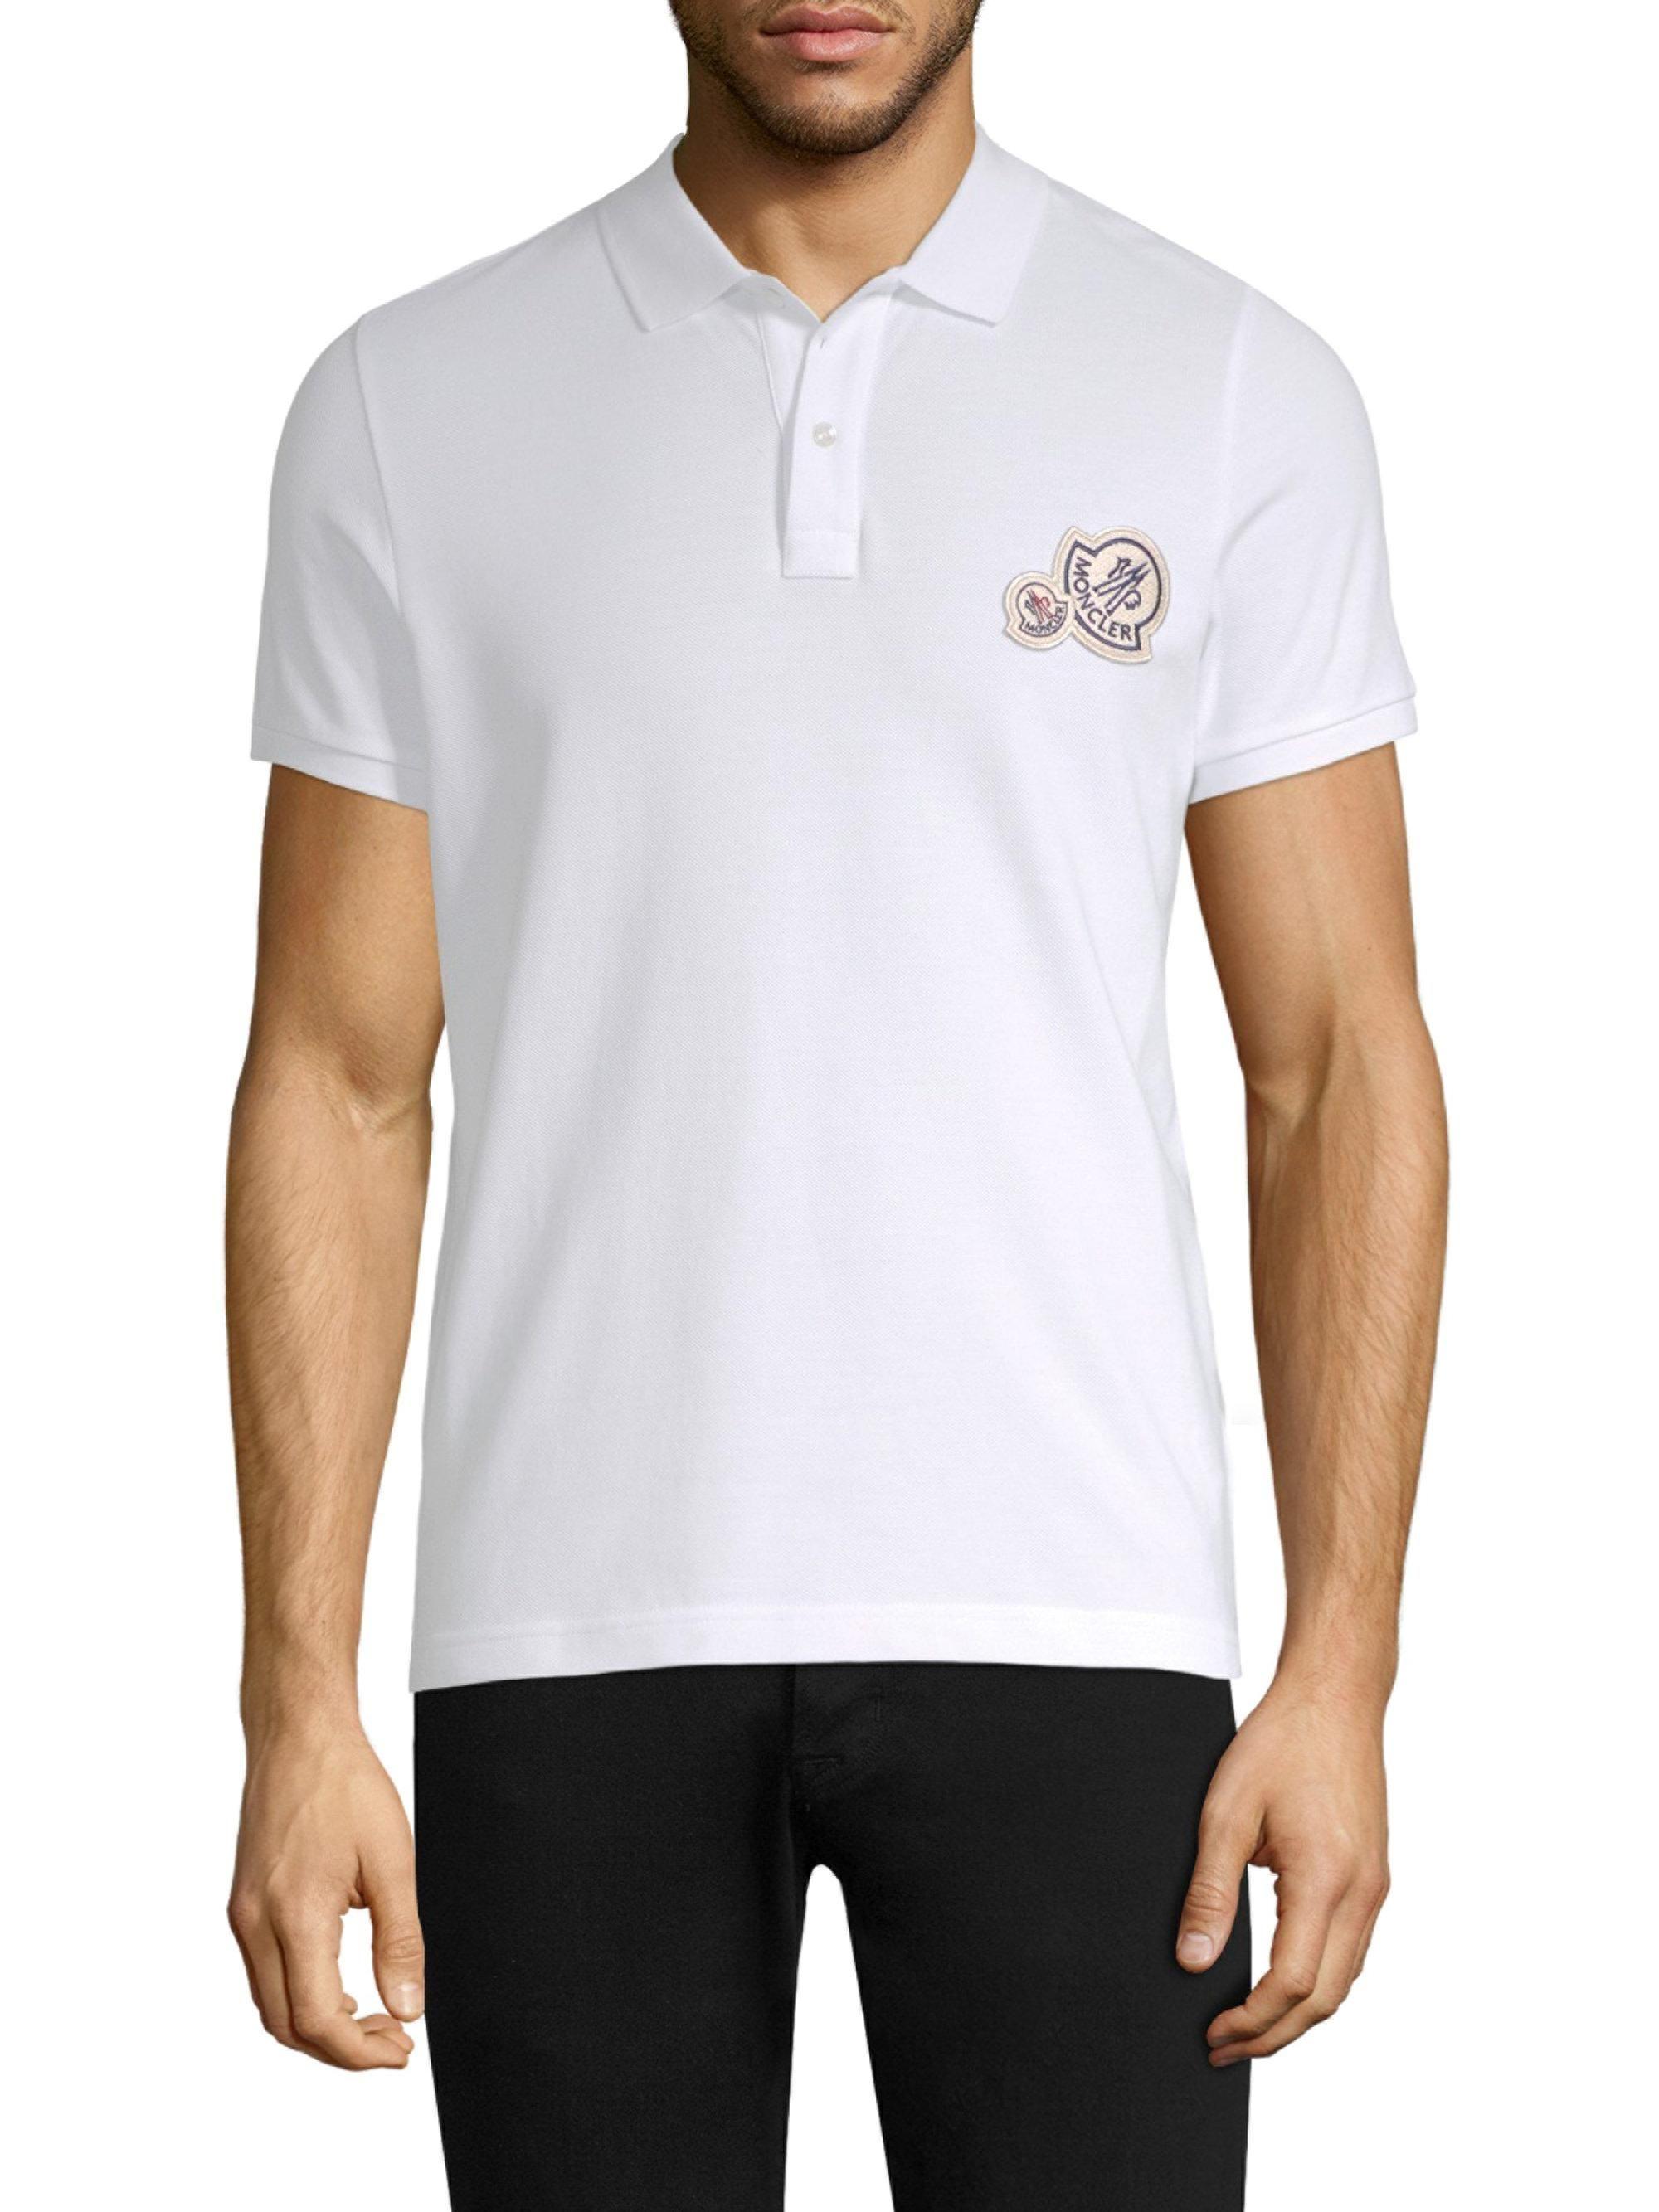 Double Polo Logo - Moncler Double Logo Polo in White for Men - Lyst